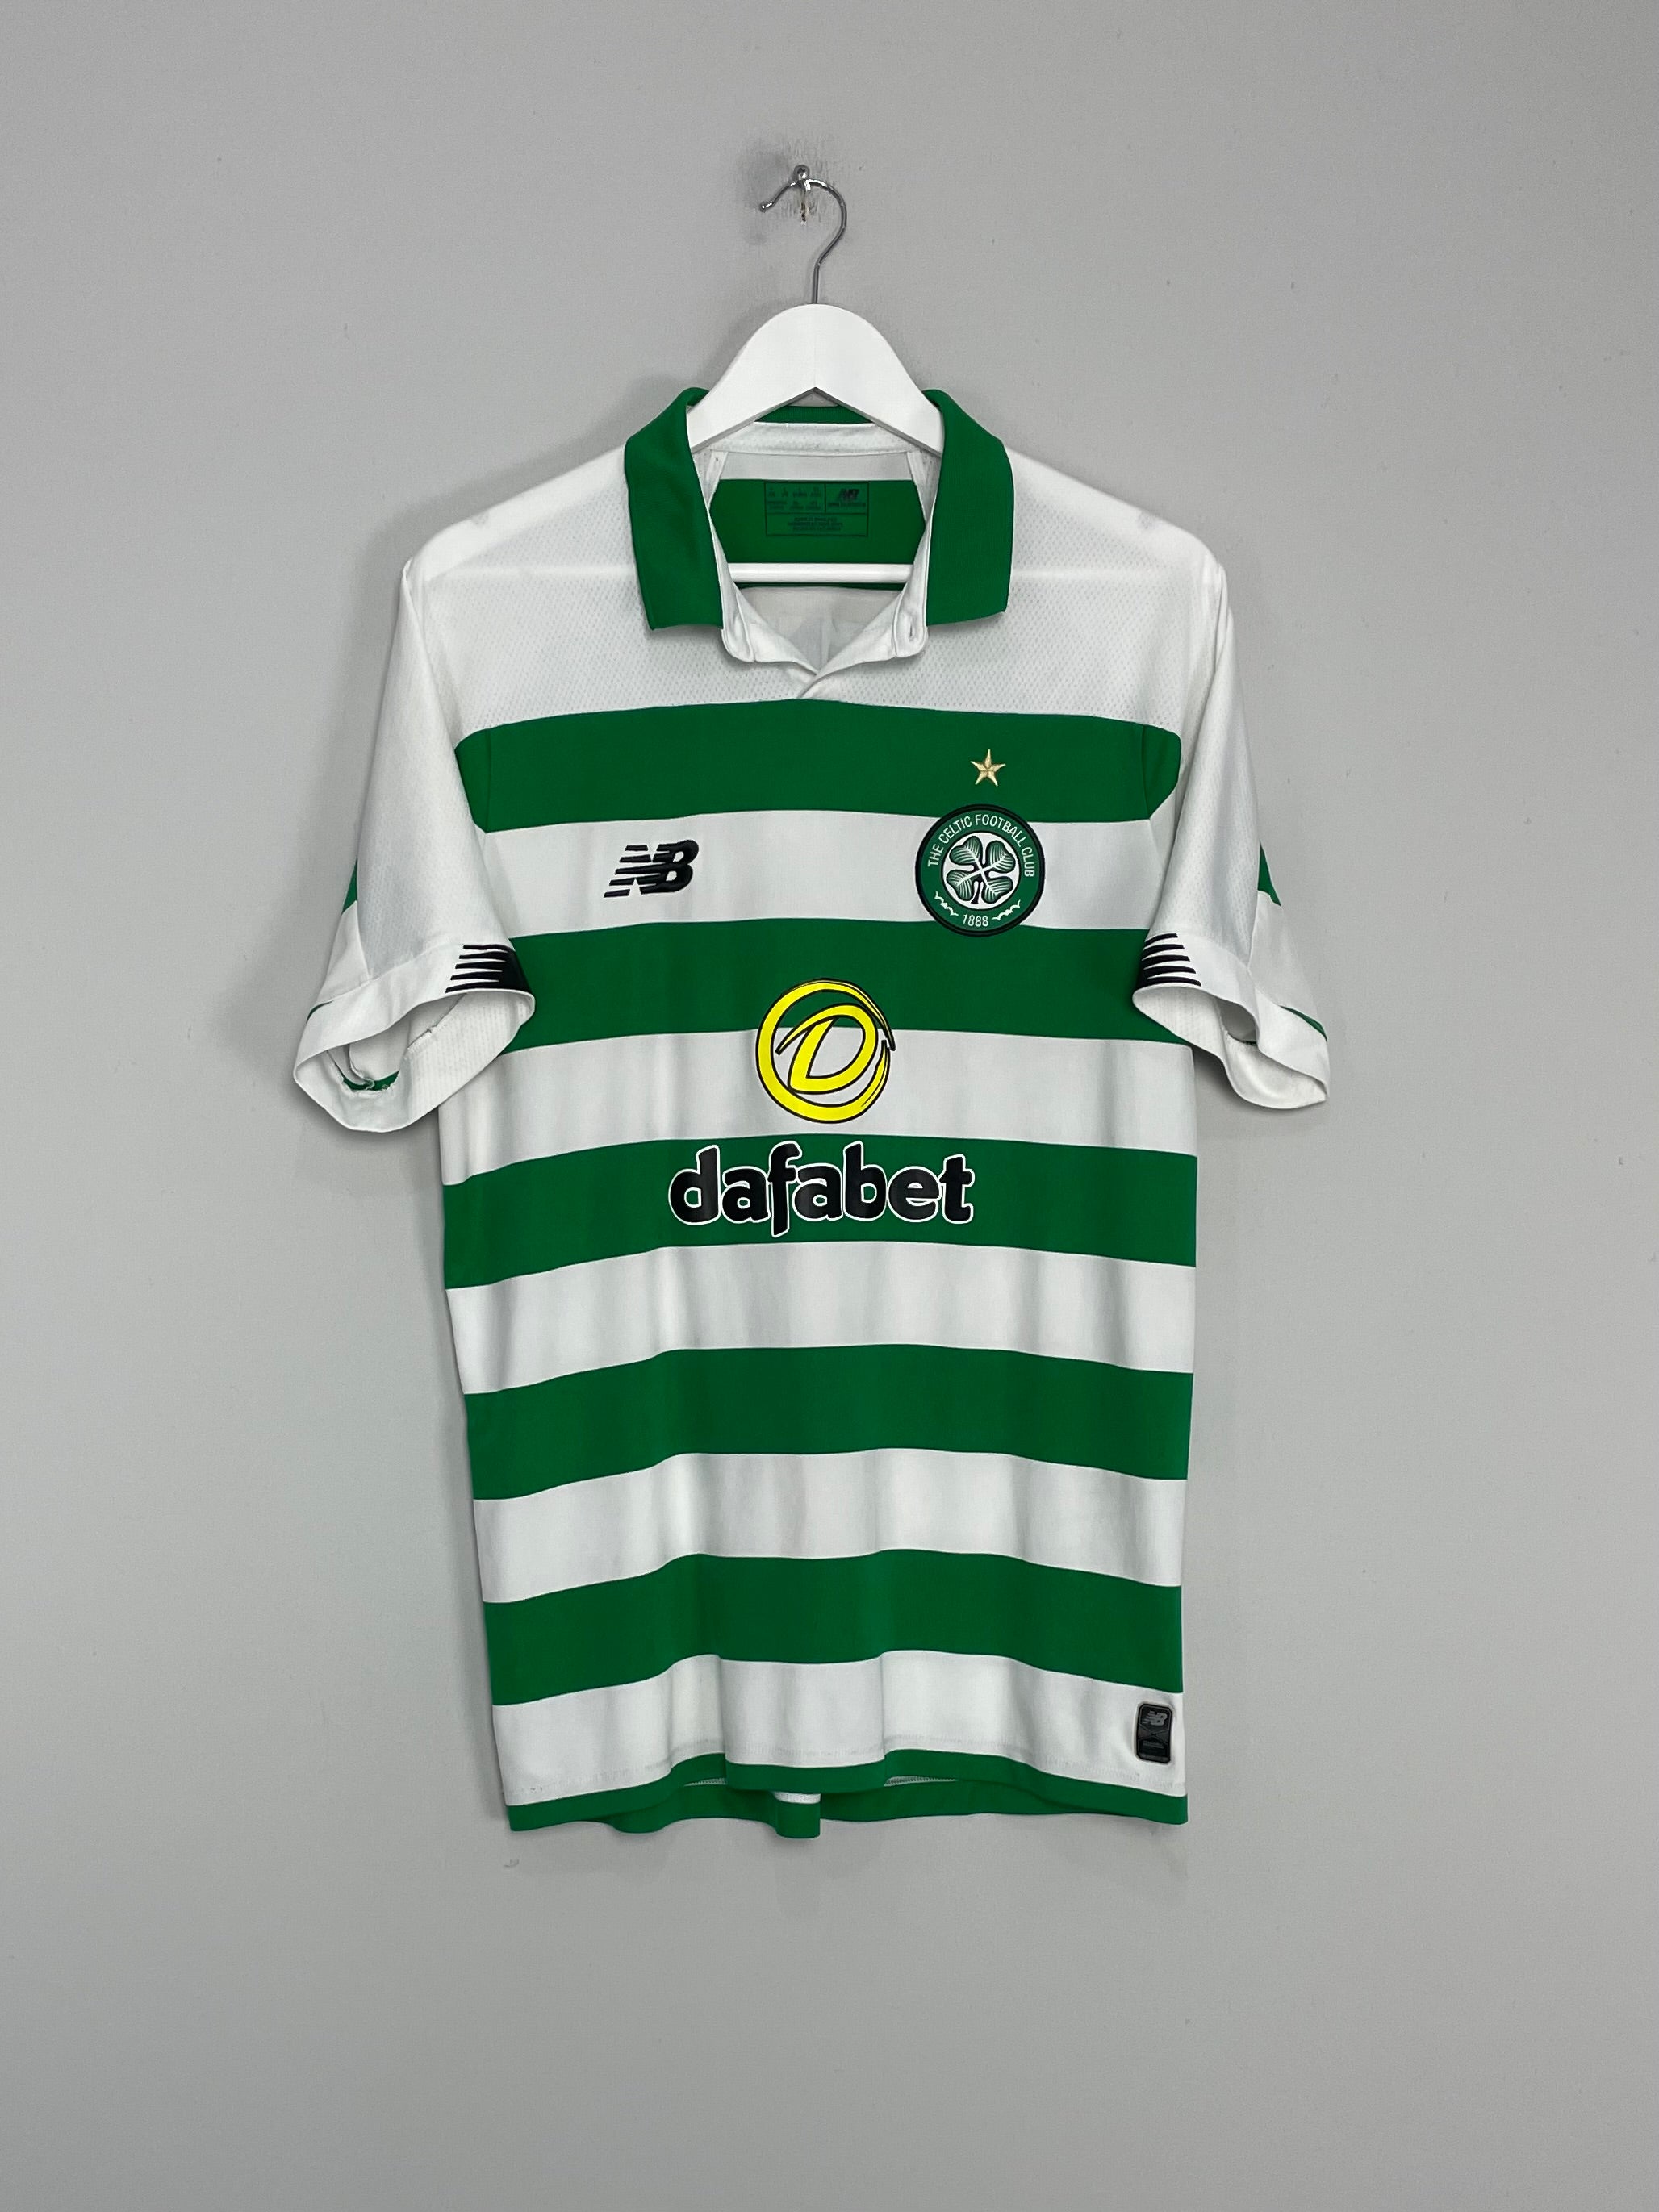 New Balance Launch Celtic 2019/20 Home Shirt - SoccerBible